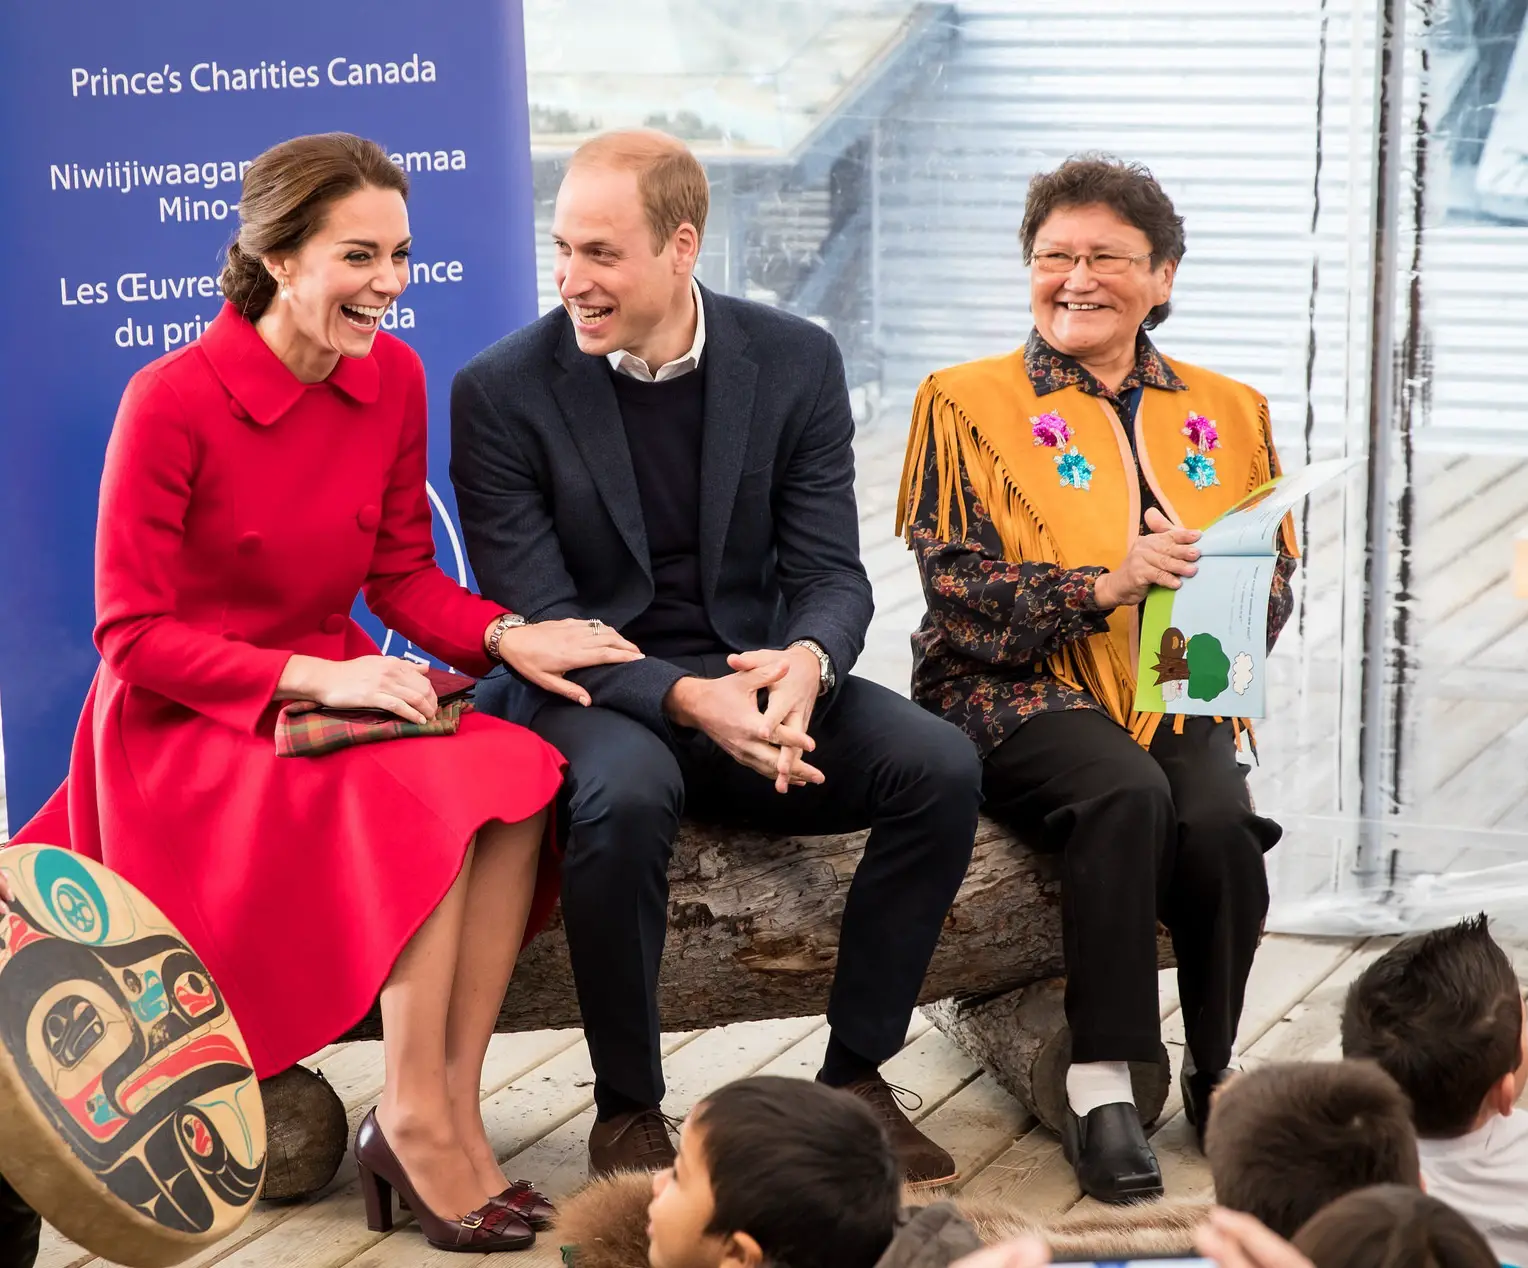 Duchess of Cambridge wore Red Carolina Herrera Coat and Tod's fringe pumps in Canada in 2016